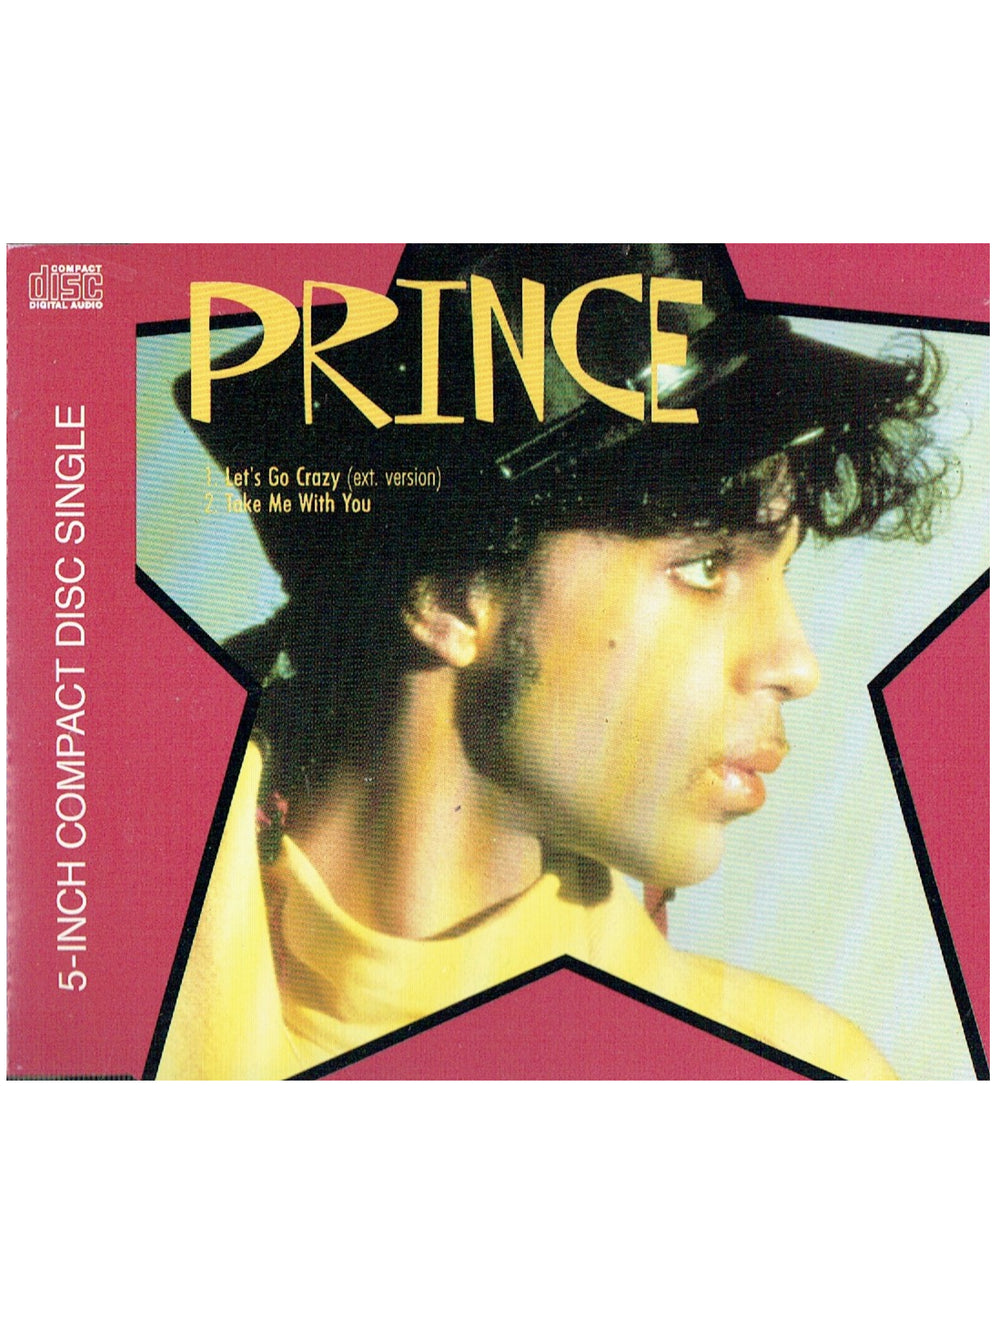 Prince - Let's Go Crazy EXT Take Me With U CD Single 5 Inch EU Preloved : 1989*